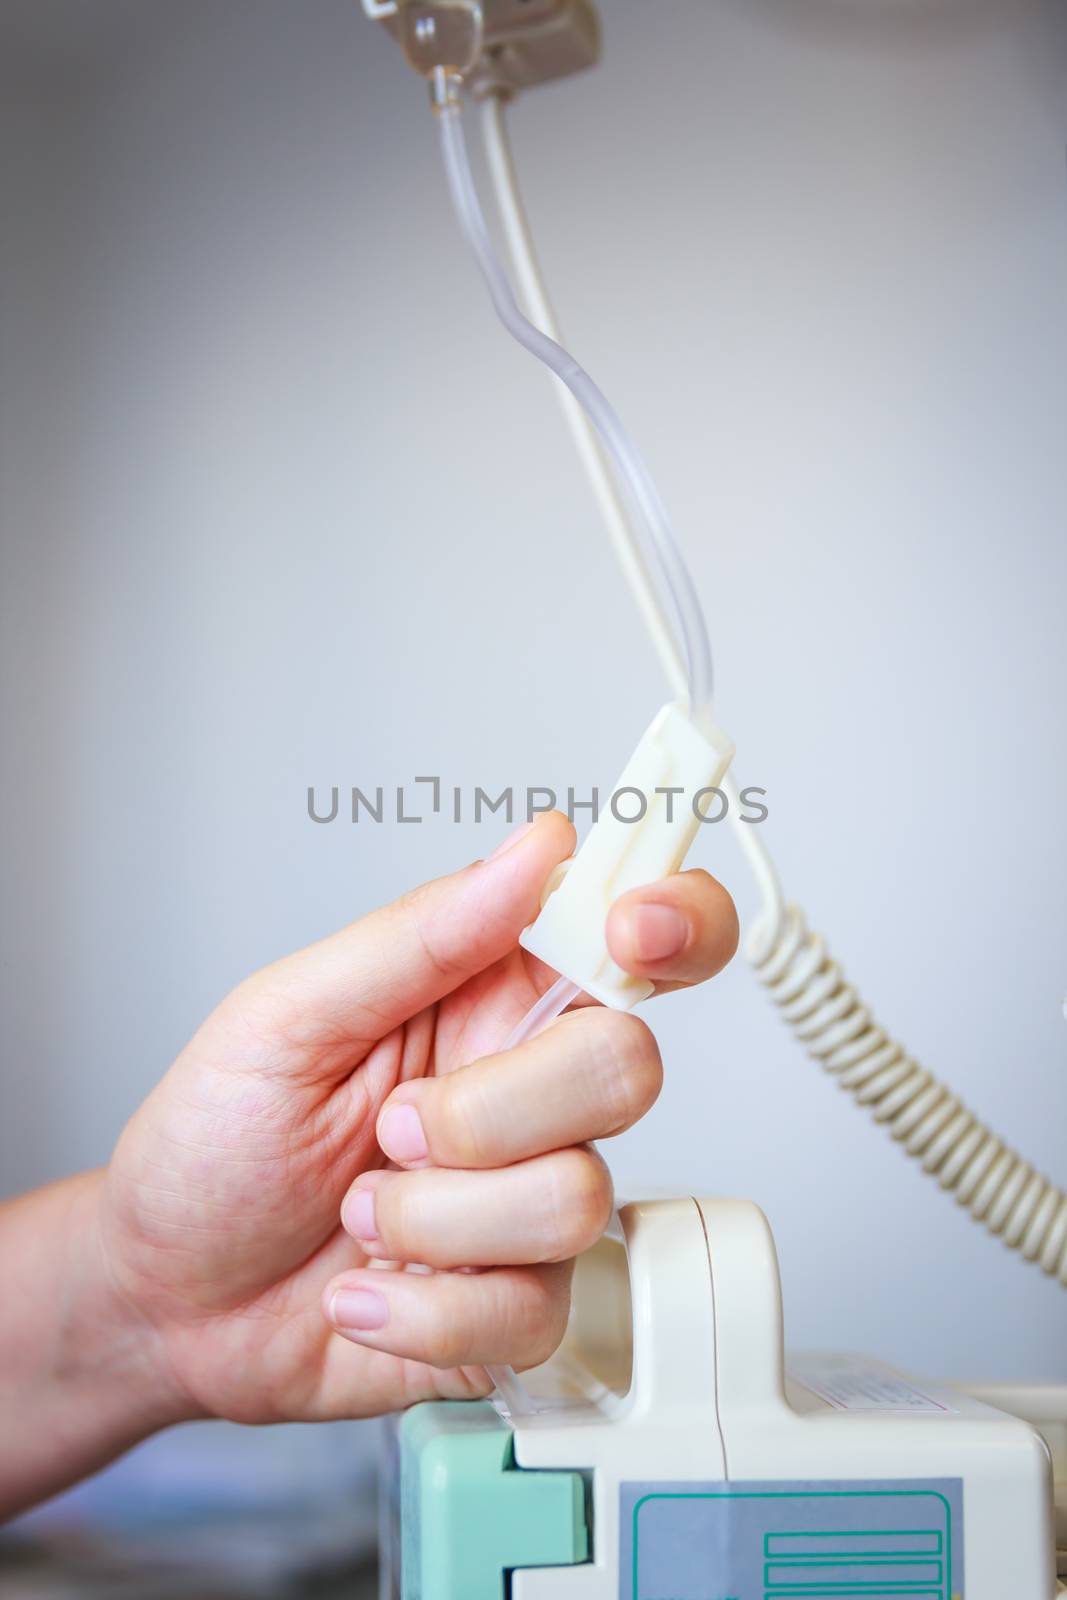 Nurse's hands regulation an intravenous (IV) drip in hospital room. Health care under medical observation. Vignette picture style.